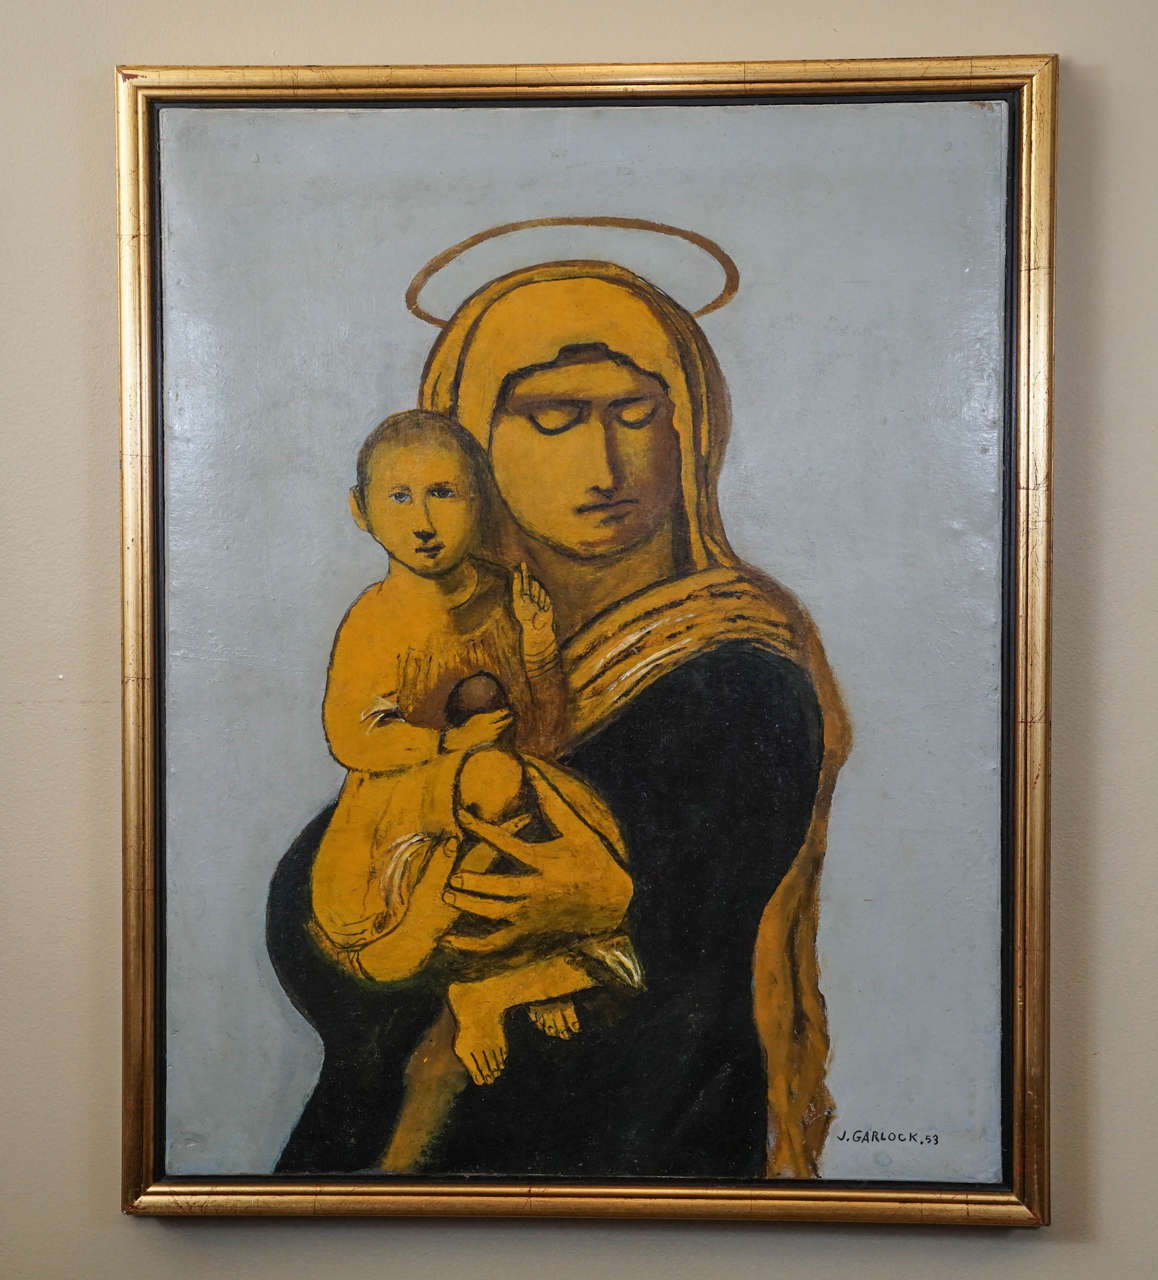 Joseph Garlock, gold Madonna, oil on canvas.